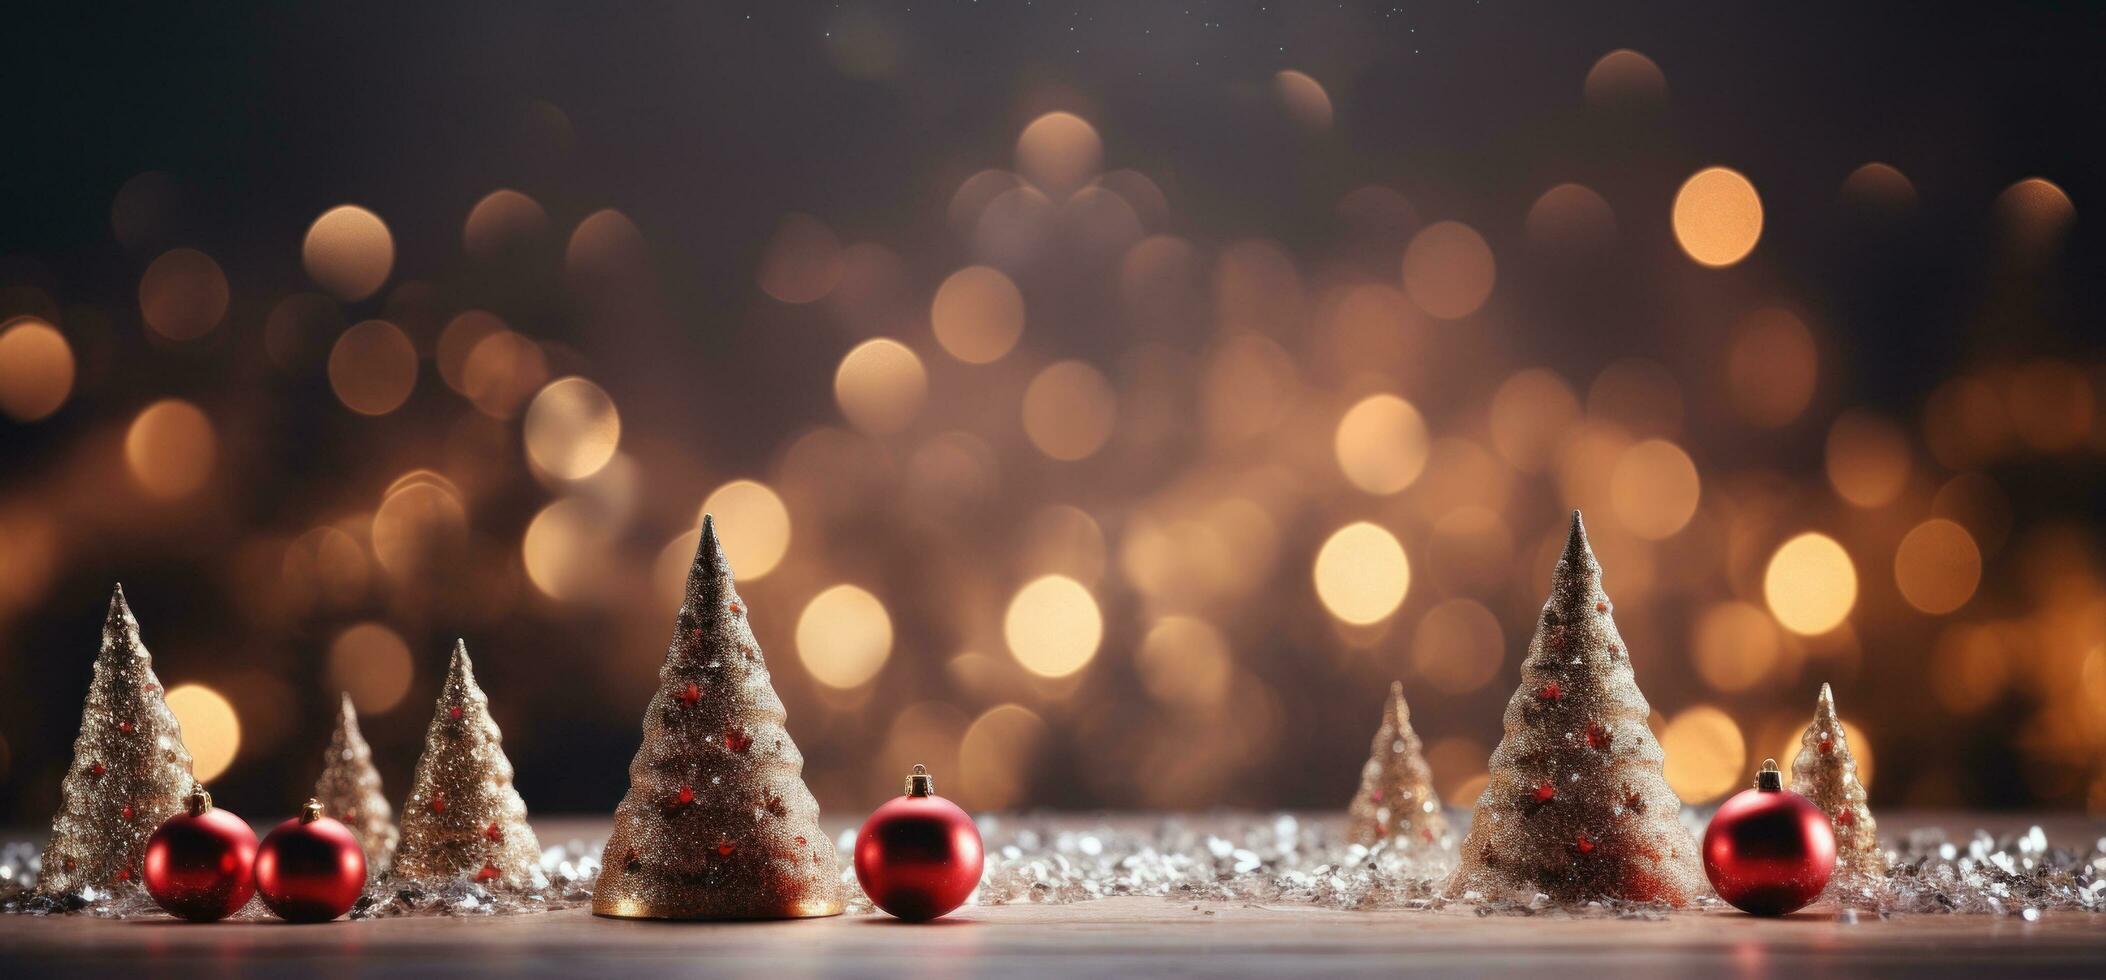 Christmas lights background photo